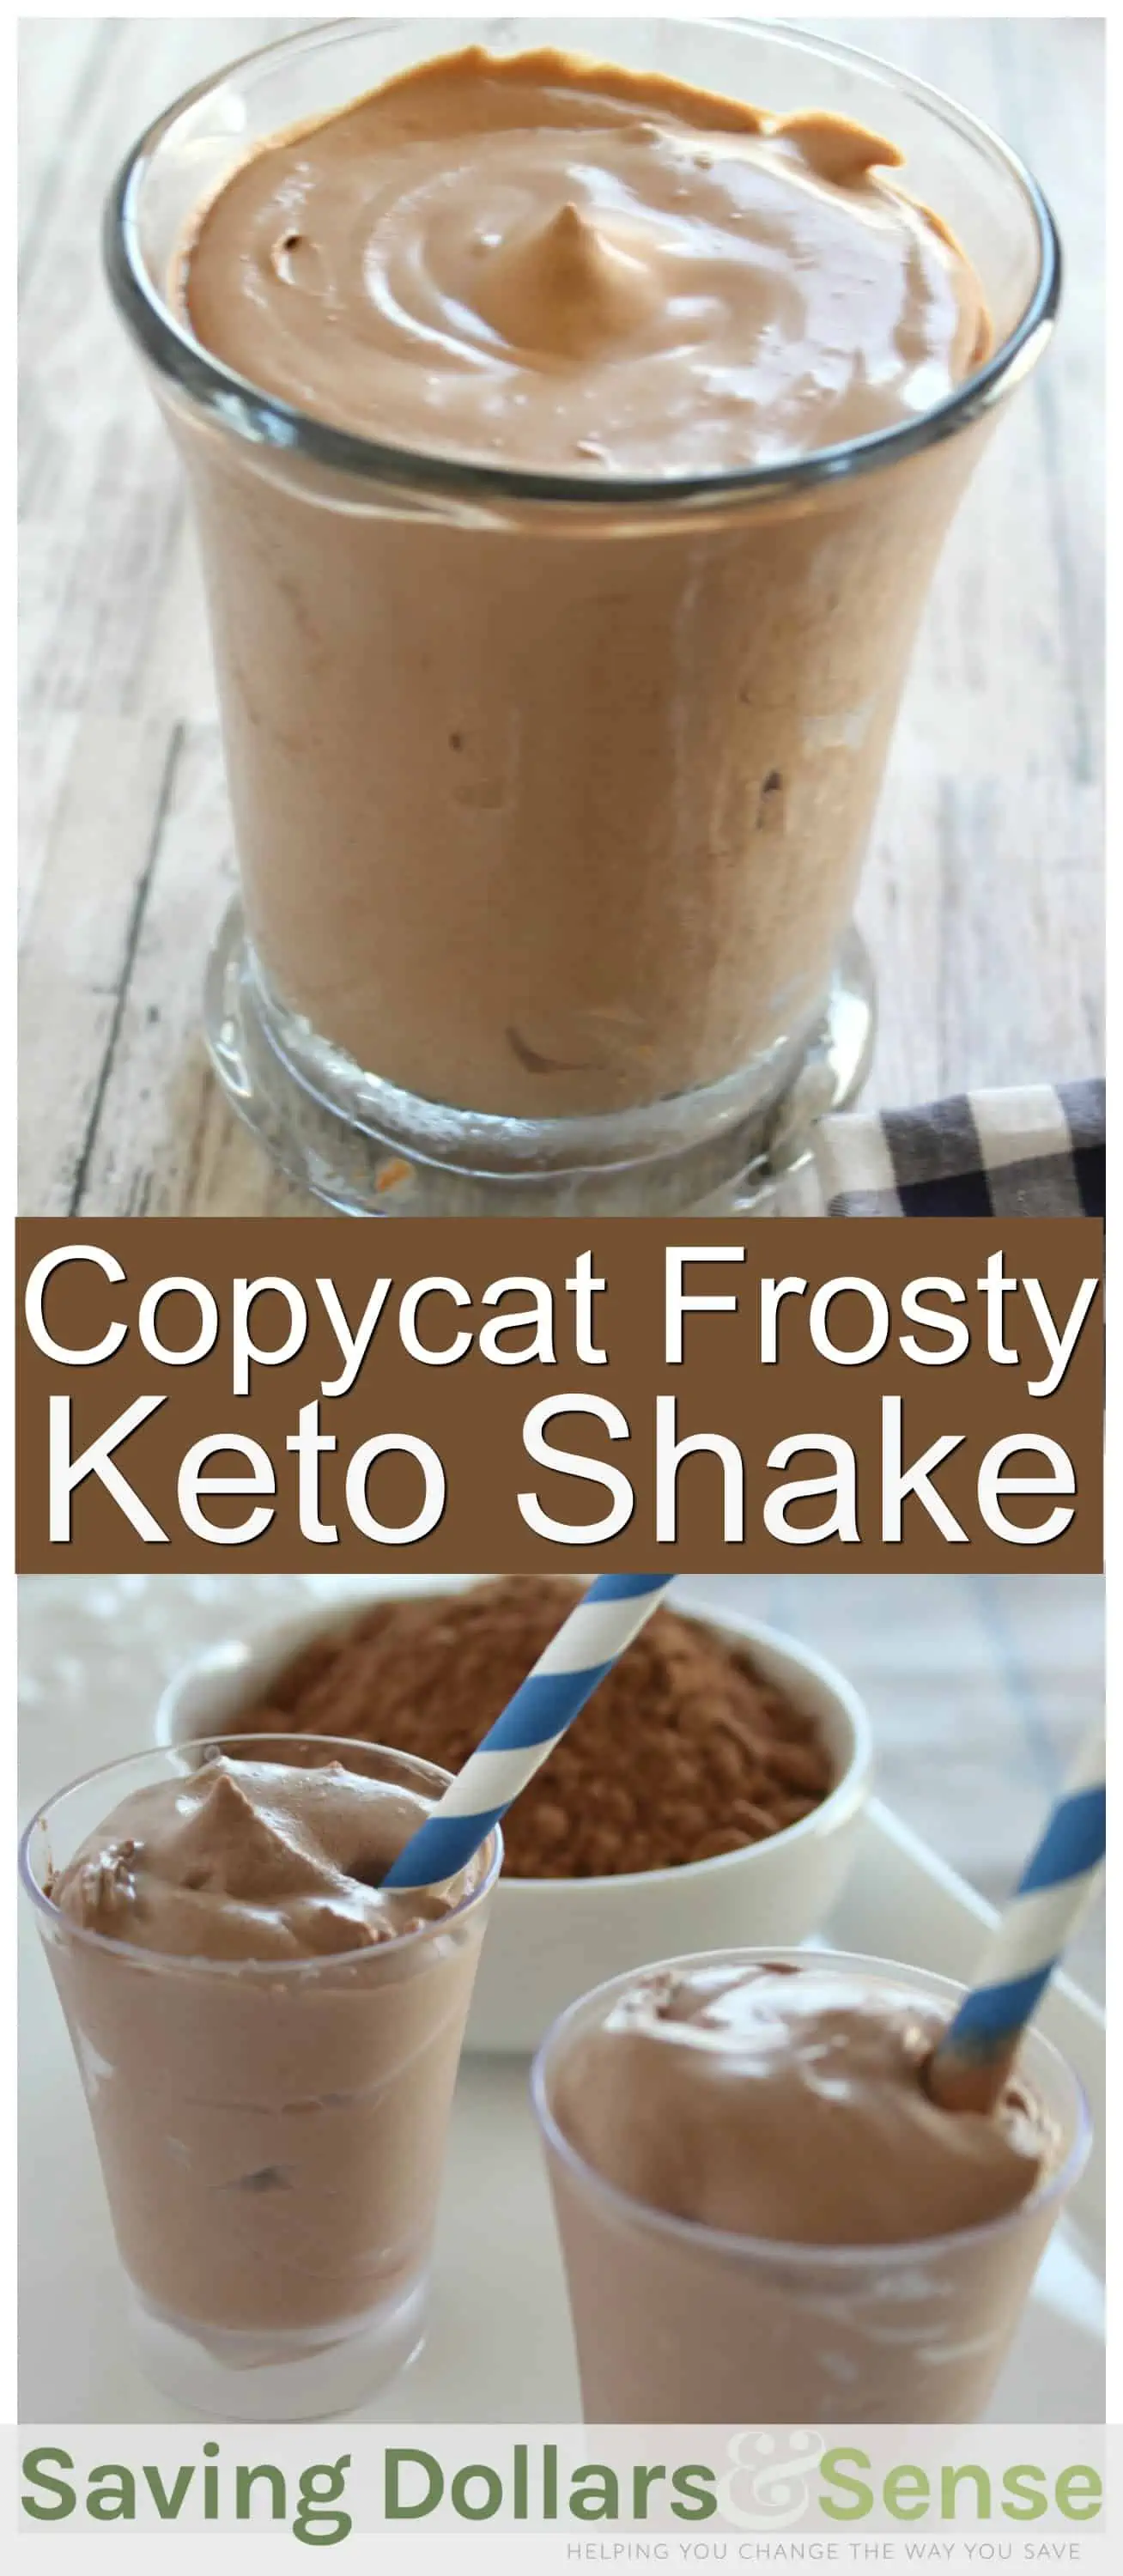 Copycat Frosty Keto Shake Recipe